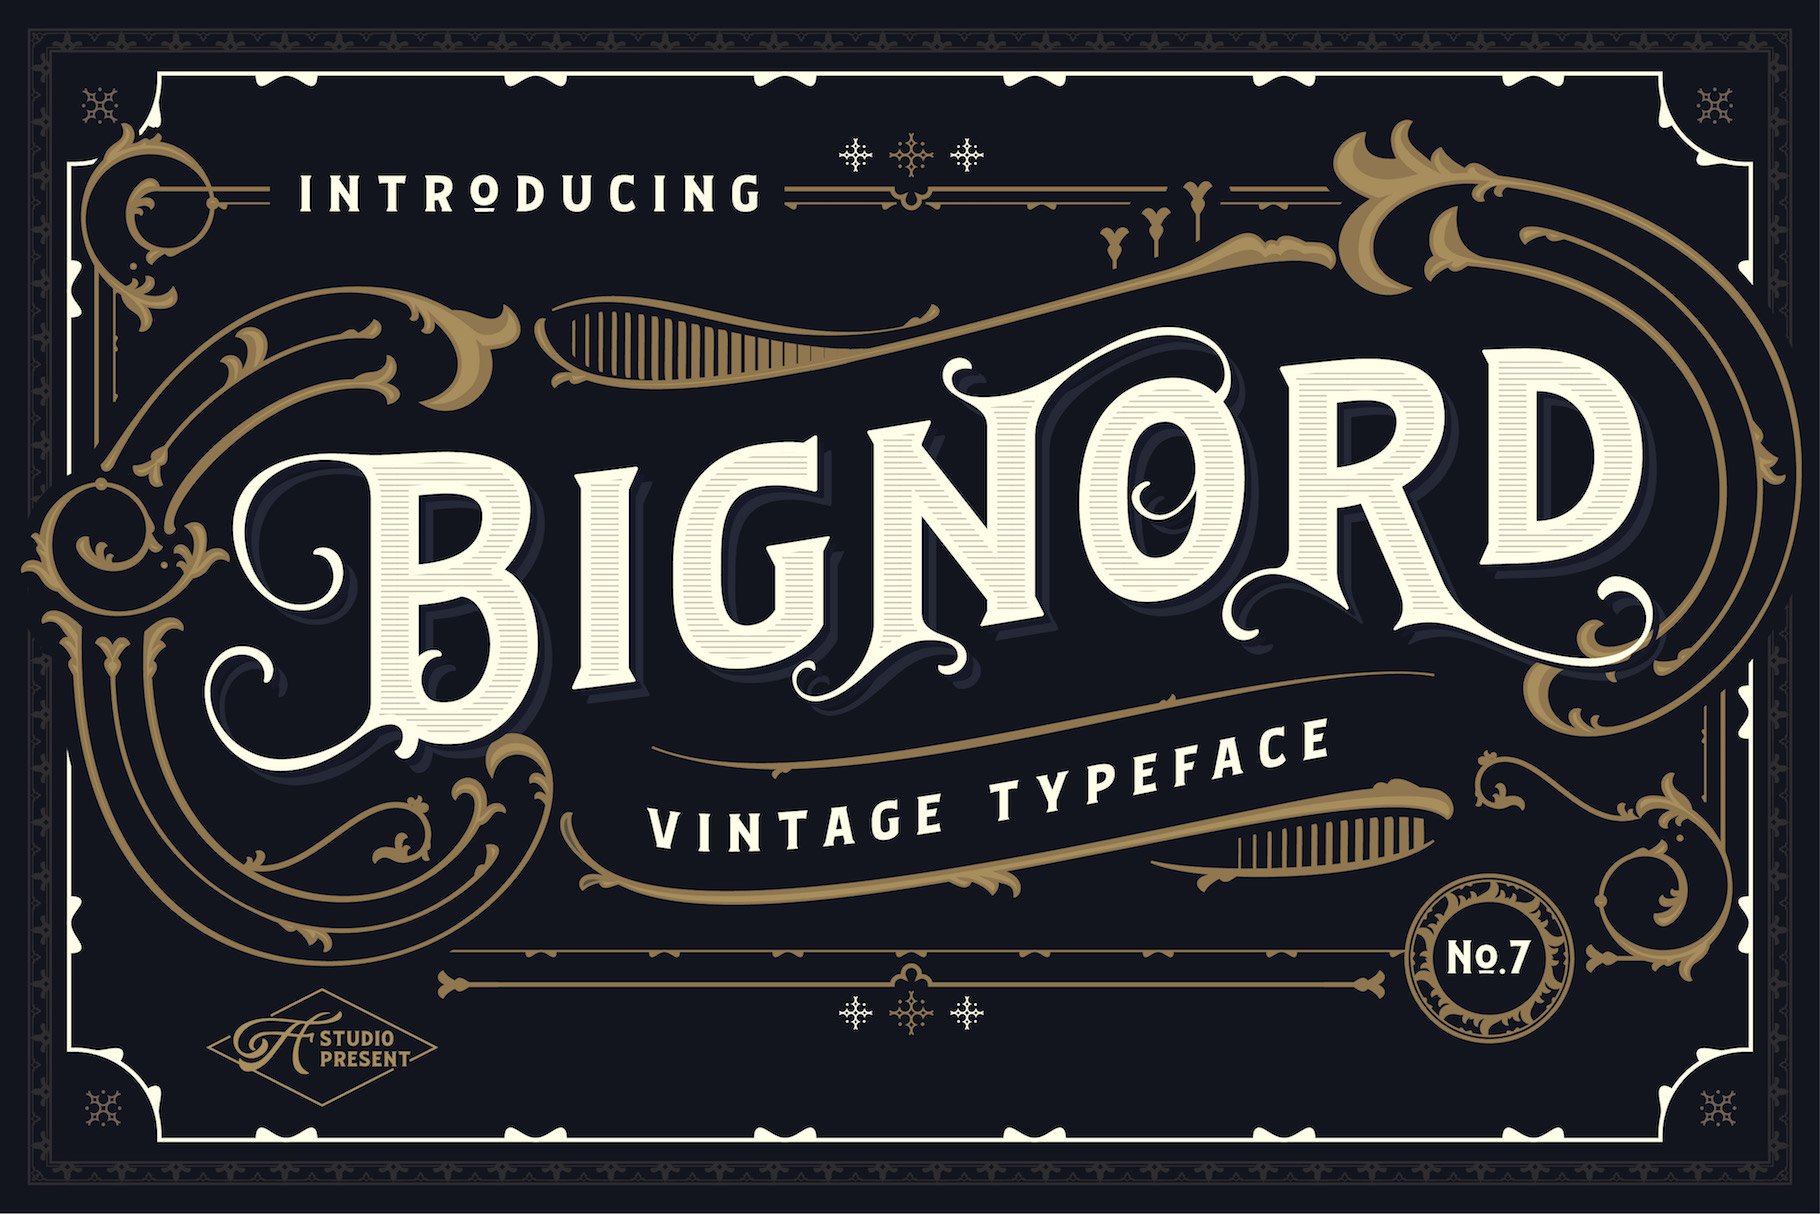 Bignord - Vintage Typeface cover image.